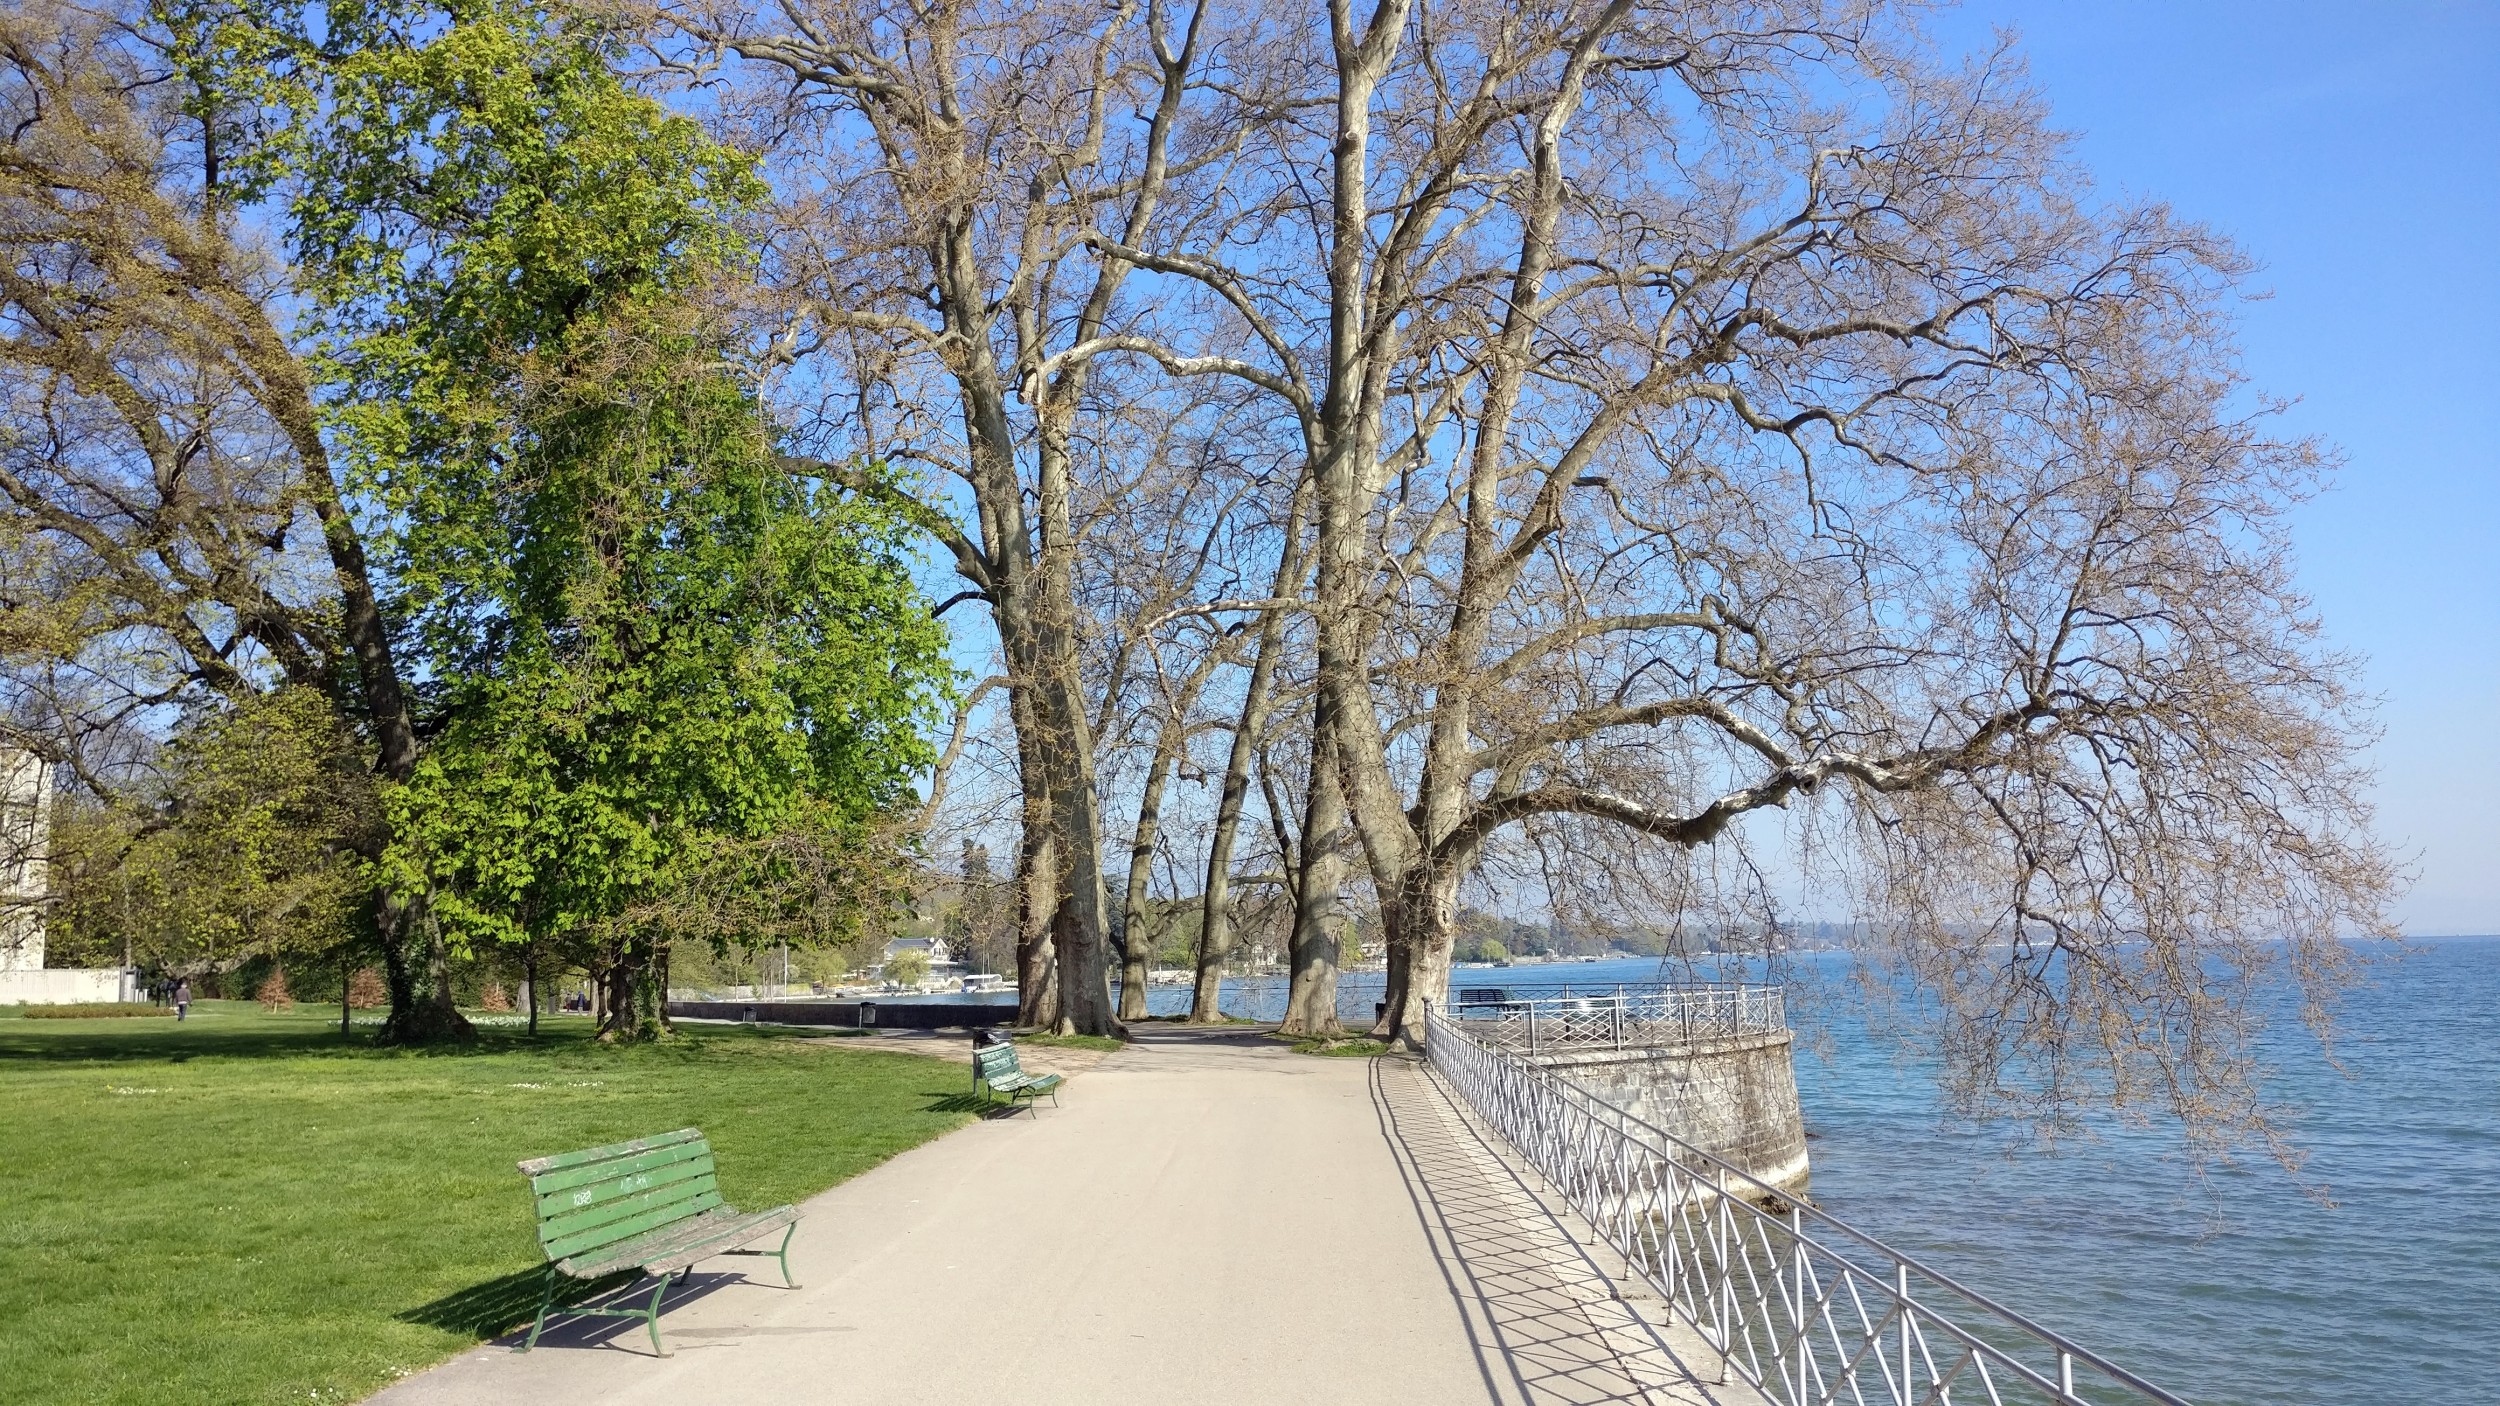 Lake Geneva, Parc Barton, and Botanical Gardens | Visions of Travel